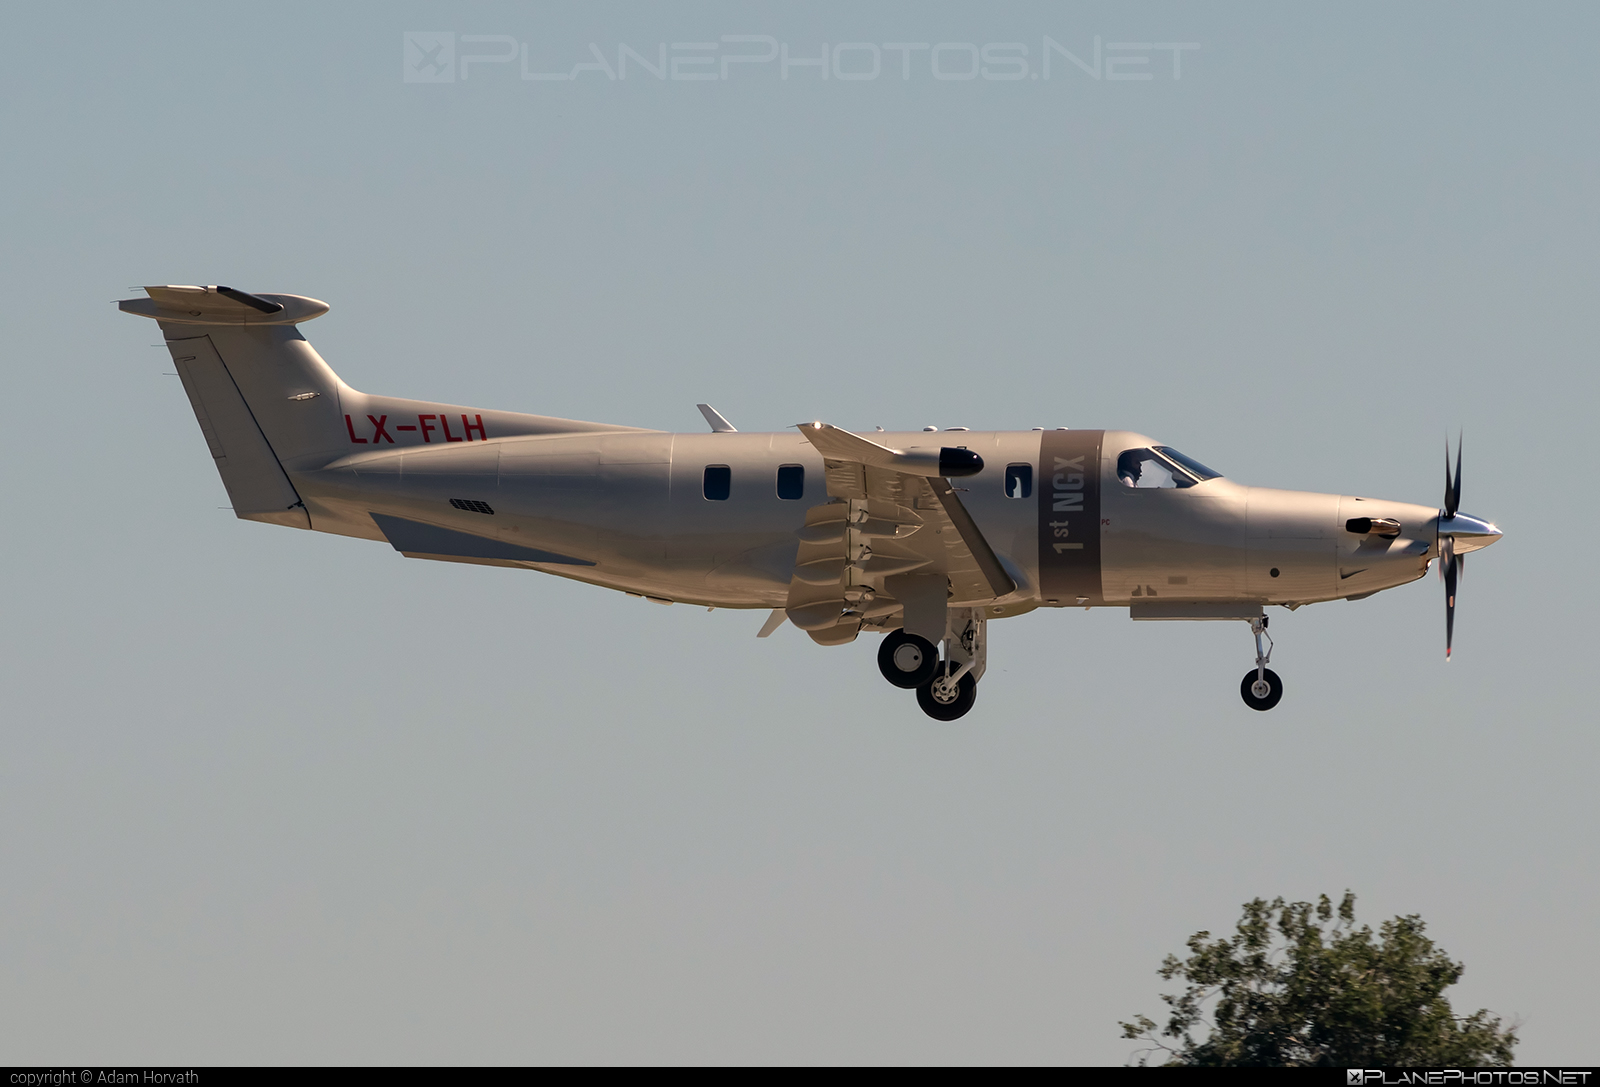 Pilatus PC-12NGX - LX-FLH operated by Jetfly Aviation #jetfly #jetflyAviation #pc12 #pc12ngx #pilatus #pilatuspc12 #pilatuspc12ngx